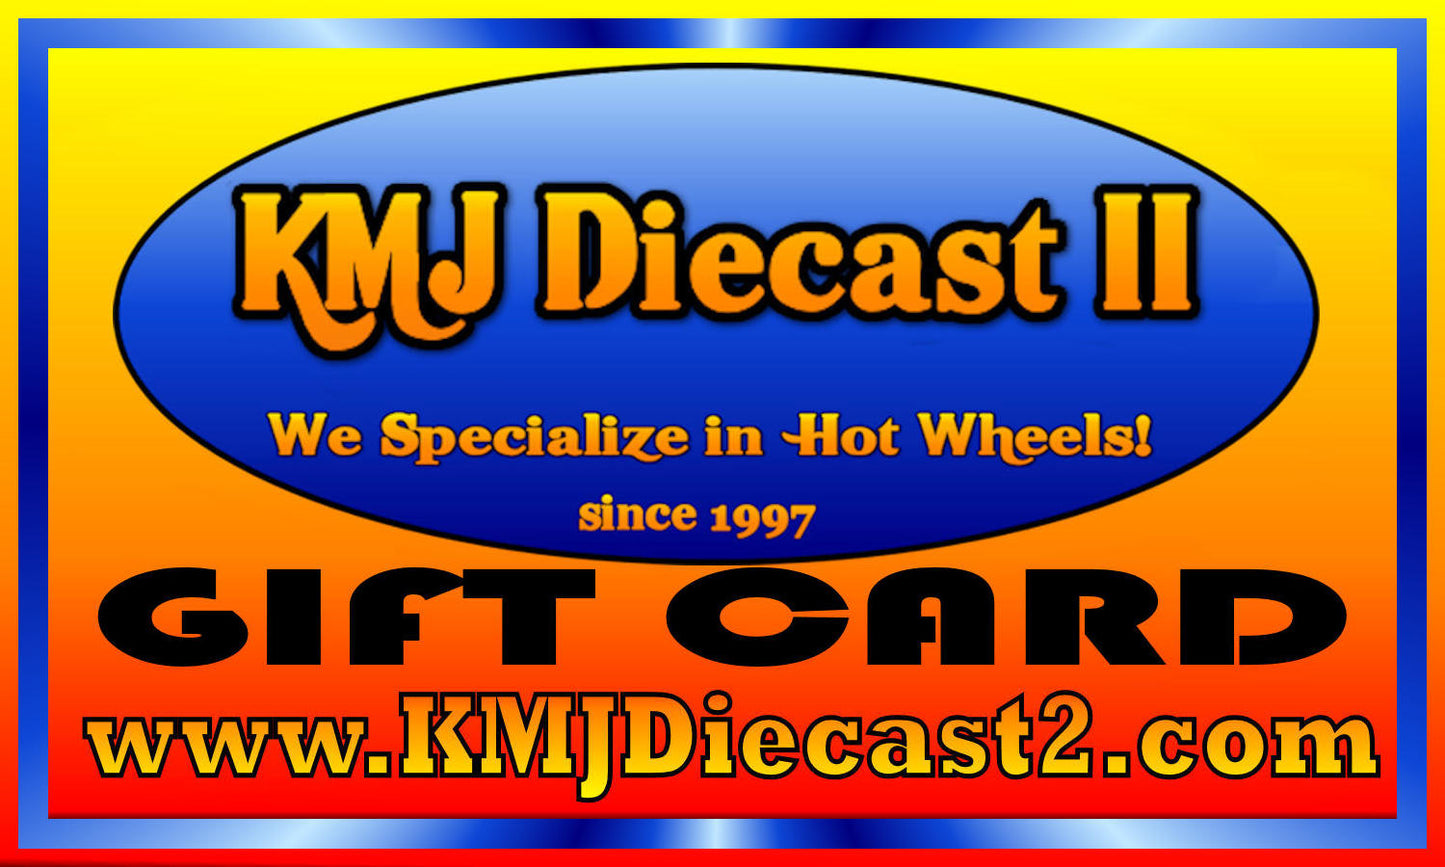 KMJ Diecast II Gift Card